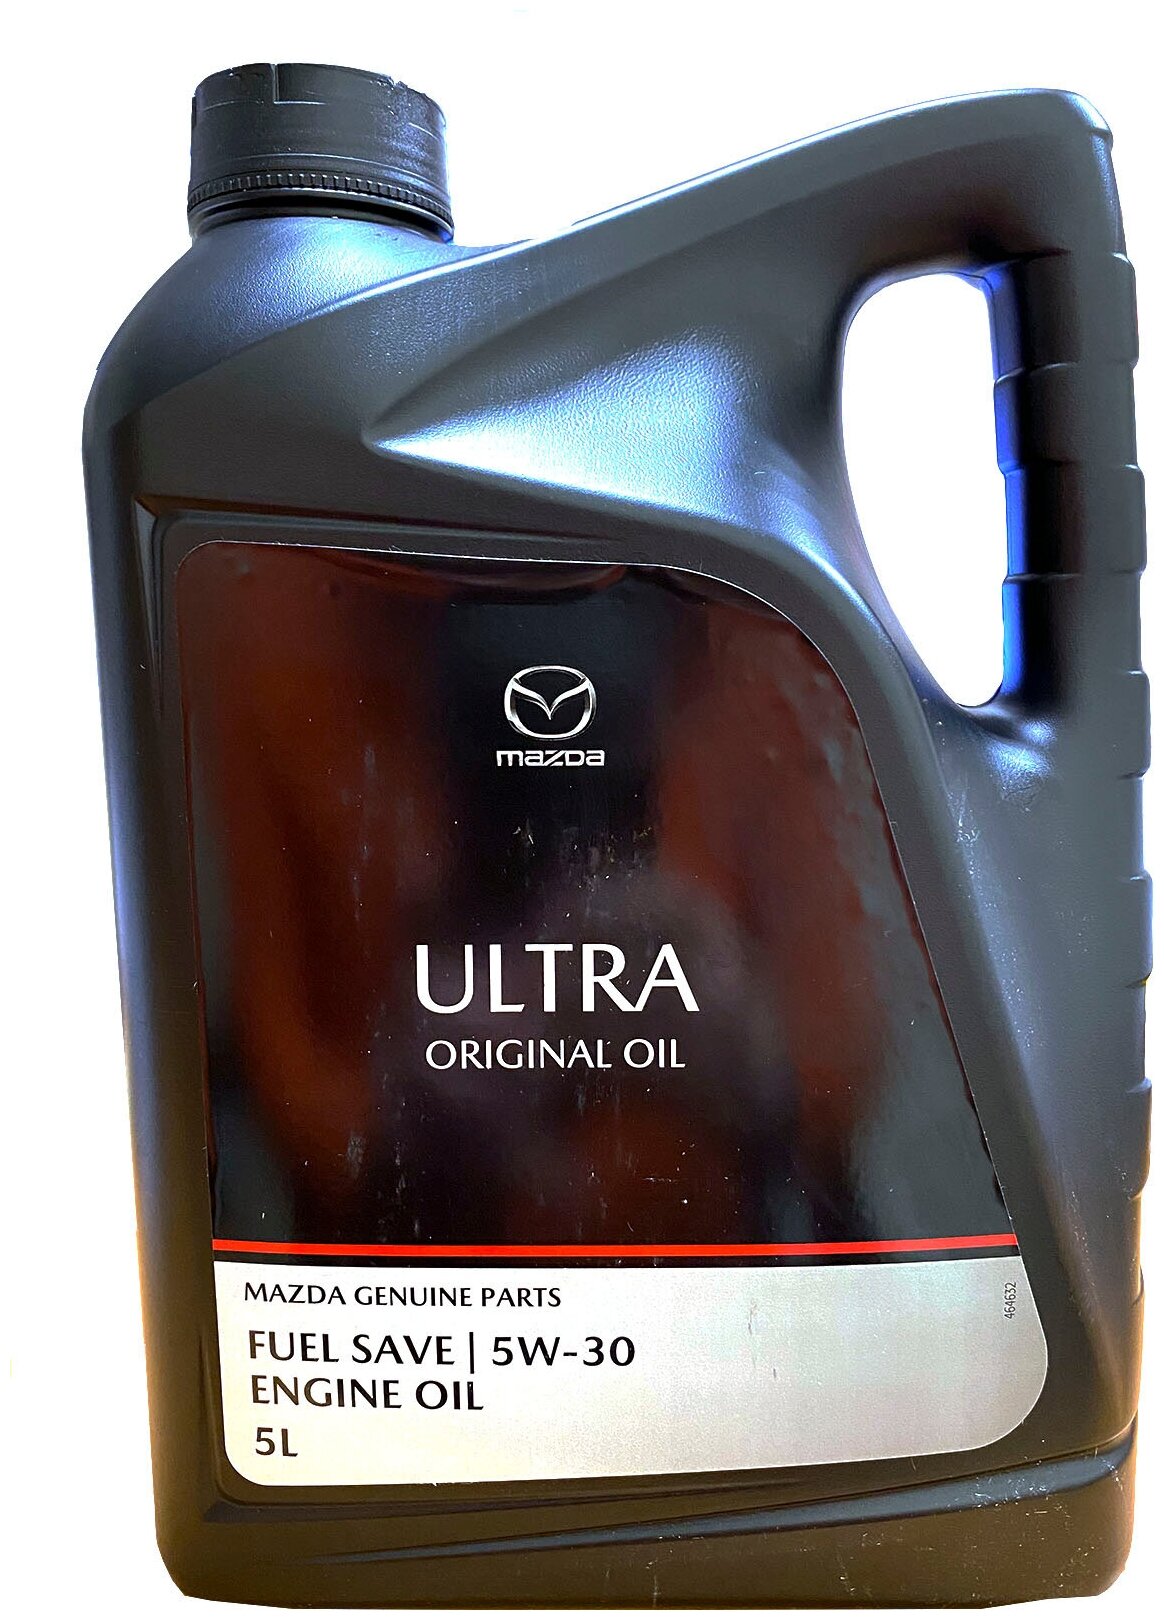  моторное масло Mazda Original Oil Ultra 5W-30, 5 л .